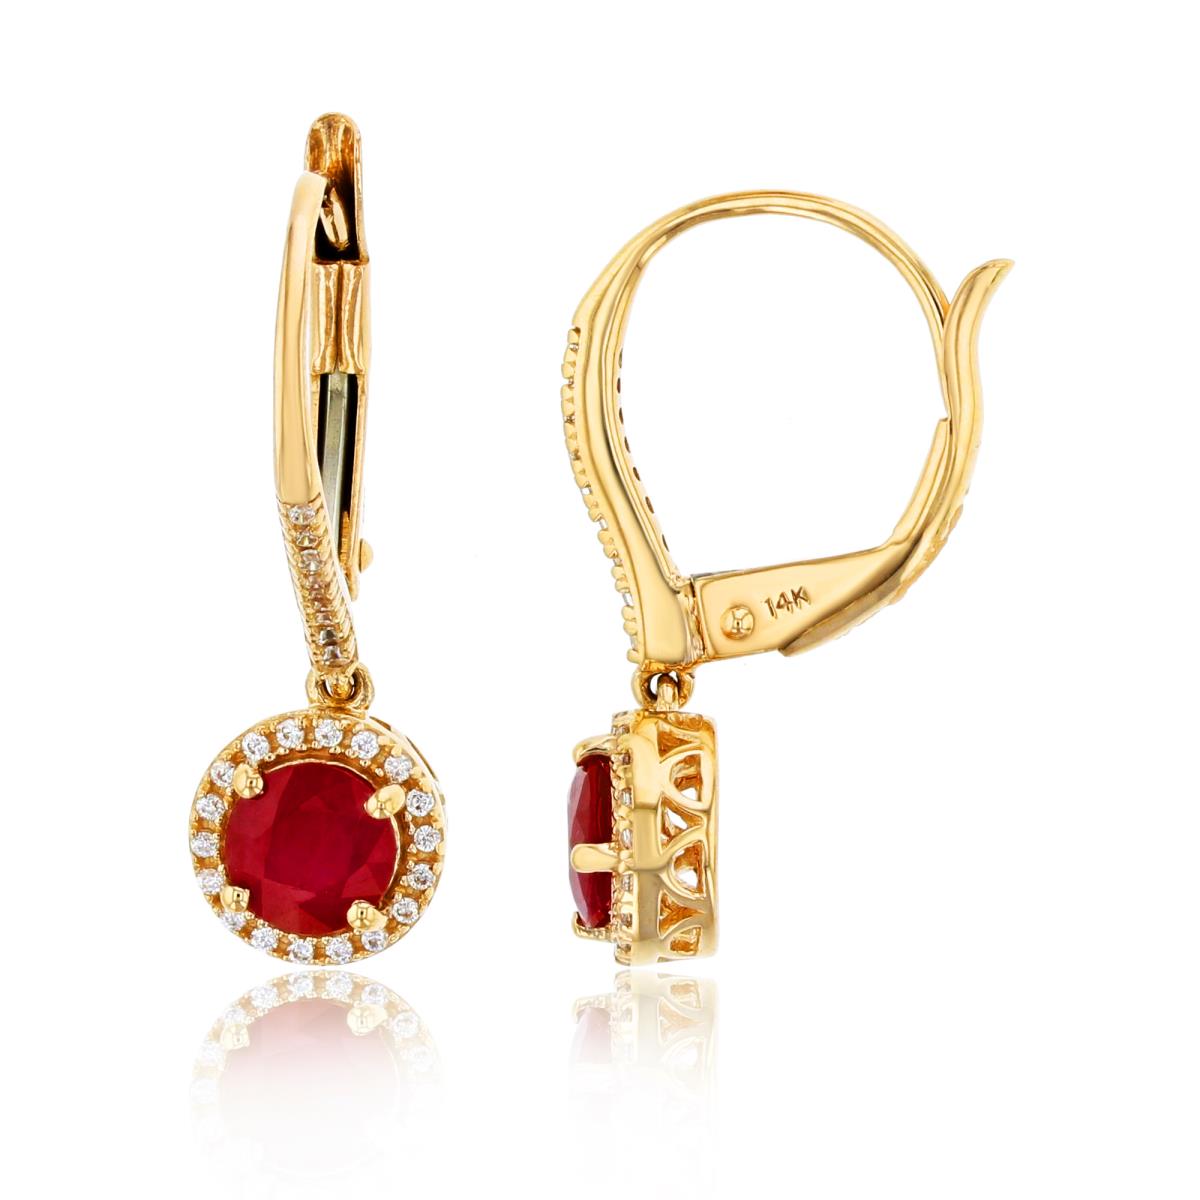 10K Yellow Gold 0.20cttw Rnd Diamonds & 5mm Rnd Glass Filled Ruby Dangling Lever Back Earrings